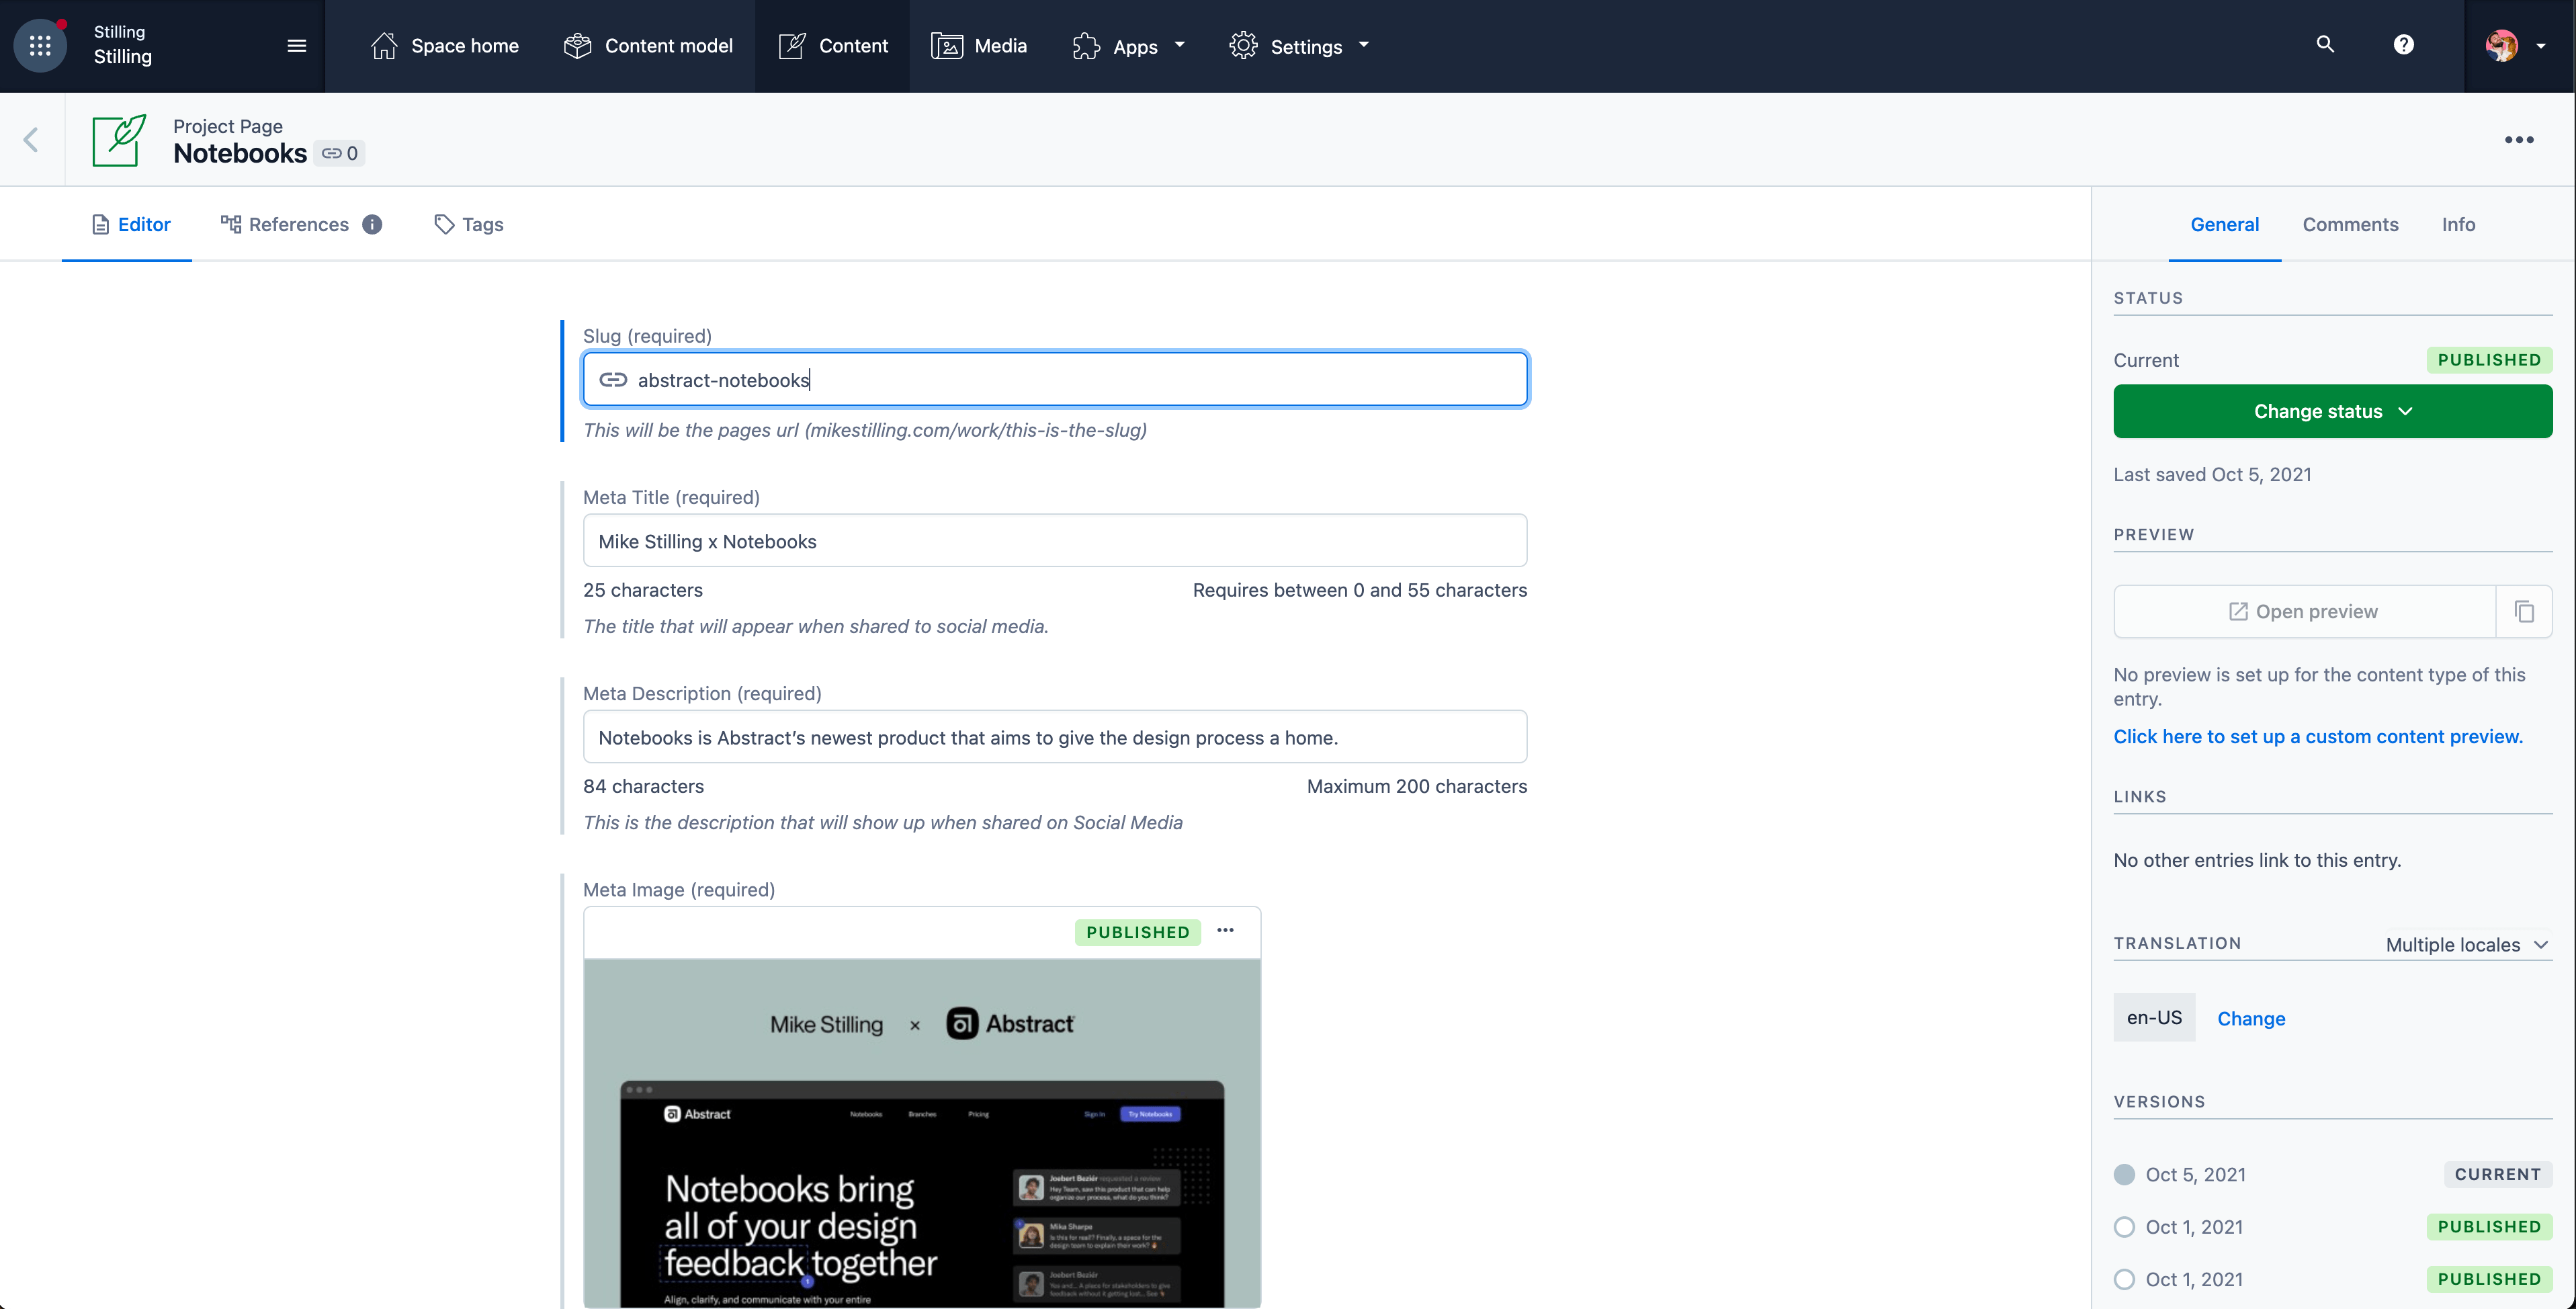 A screenshot of the Contentful CMS interface